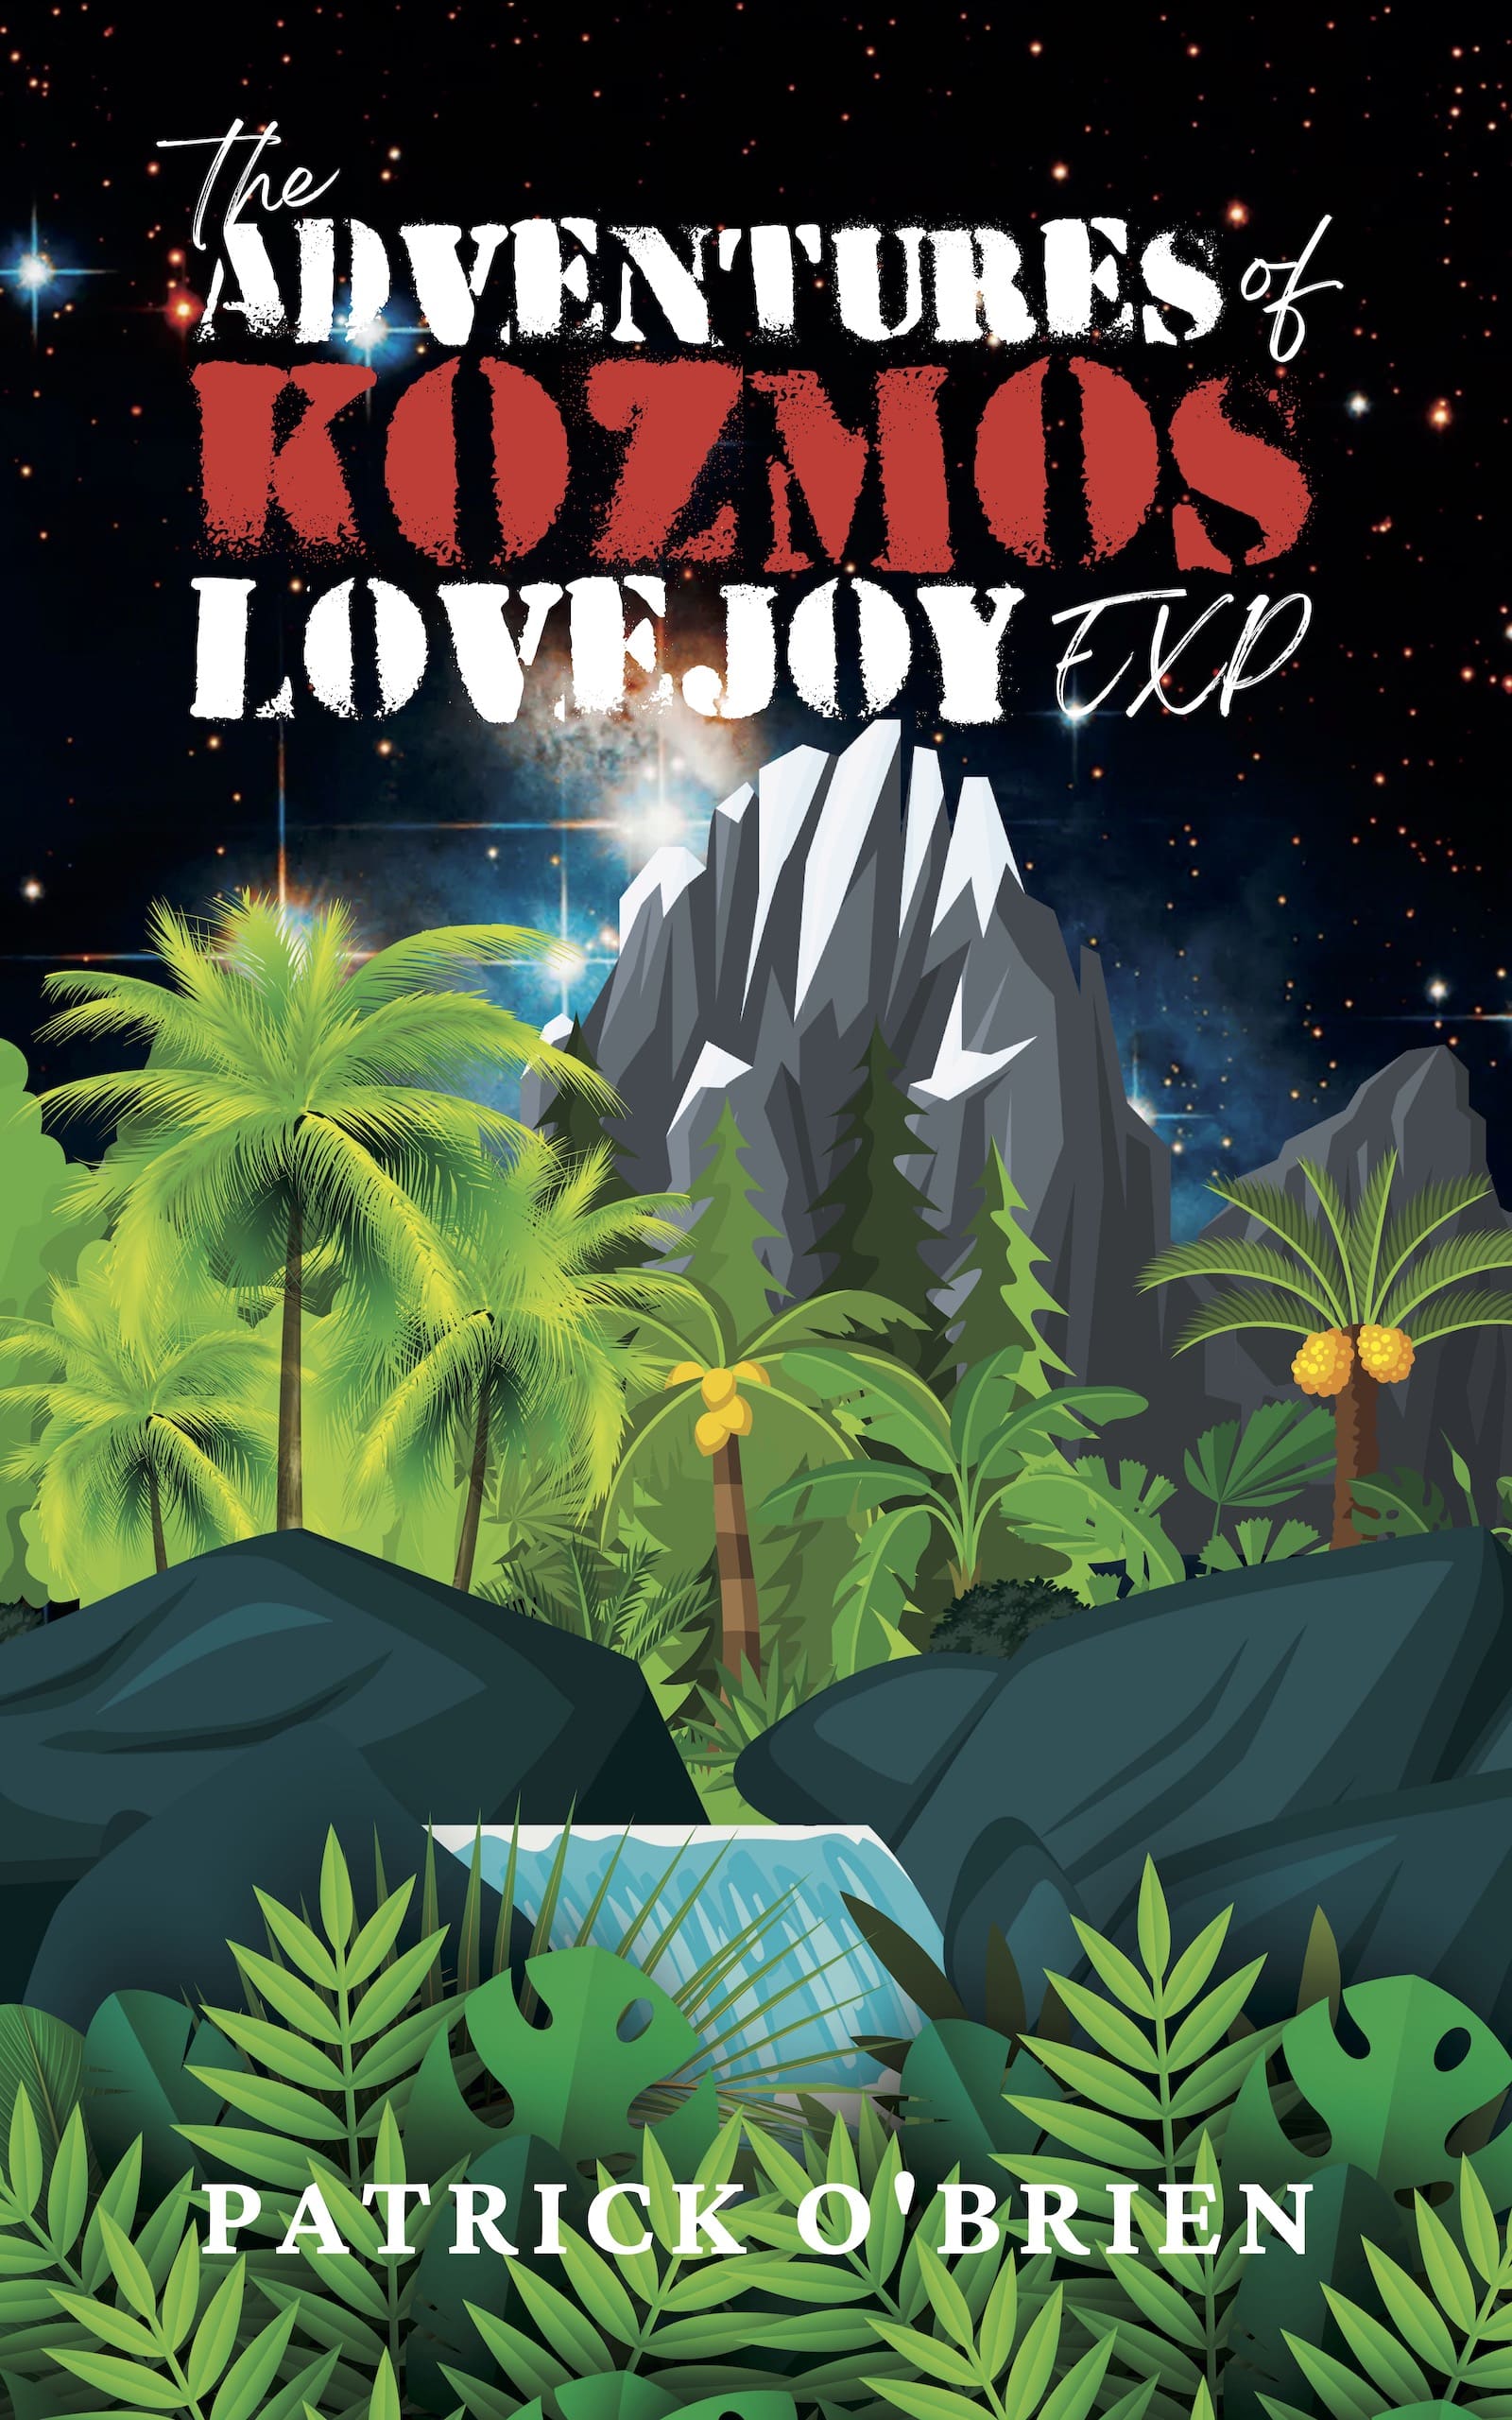 Adventures of Kozmos cover